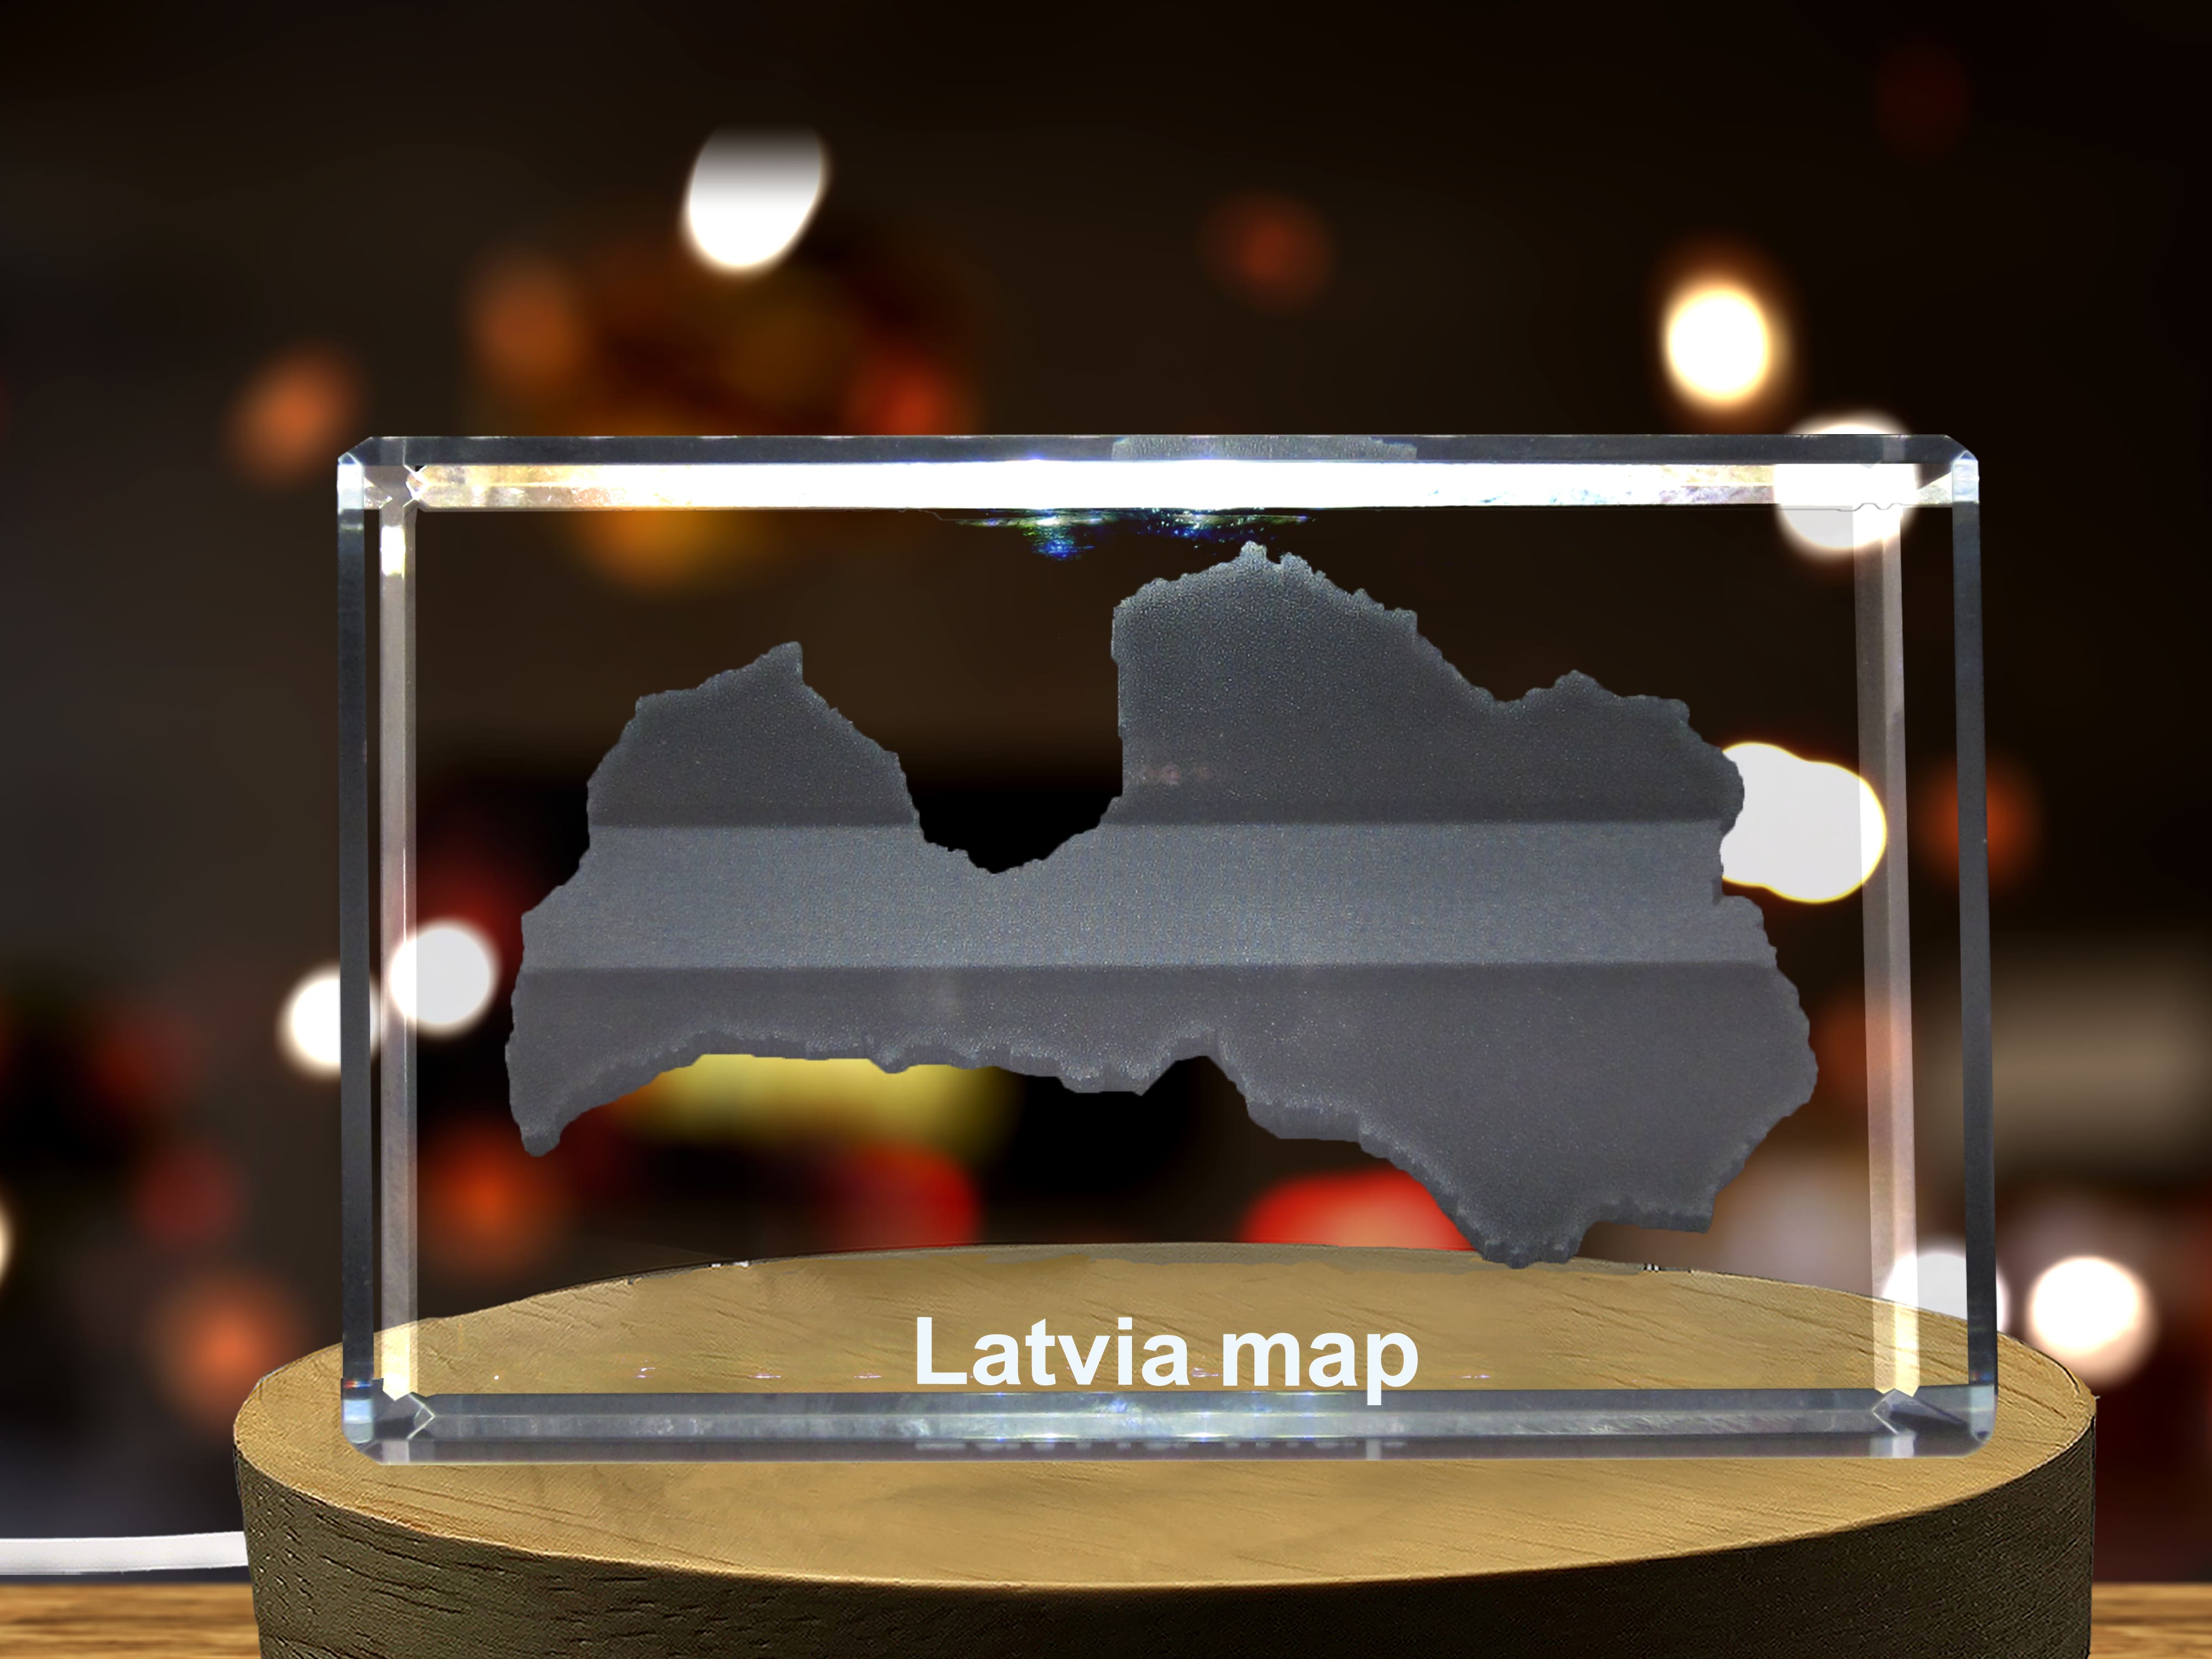 Latvia 3D Engraved Crystal 3D Engraved Crystal Keepsake/Gift/Decor/Collectible/Souvenir A&B Crystal Collection